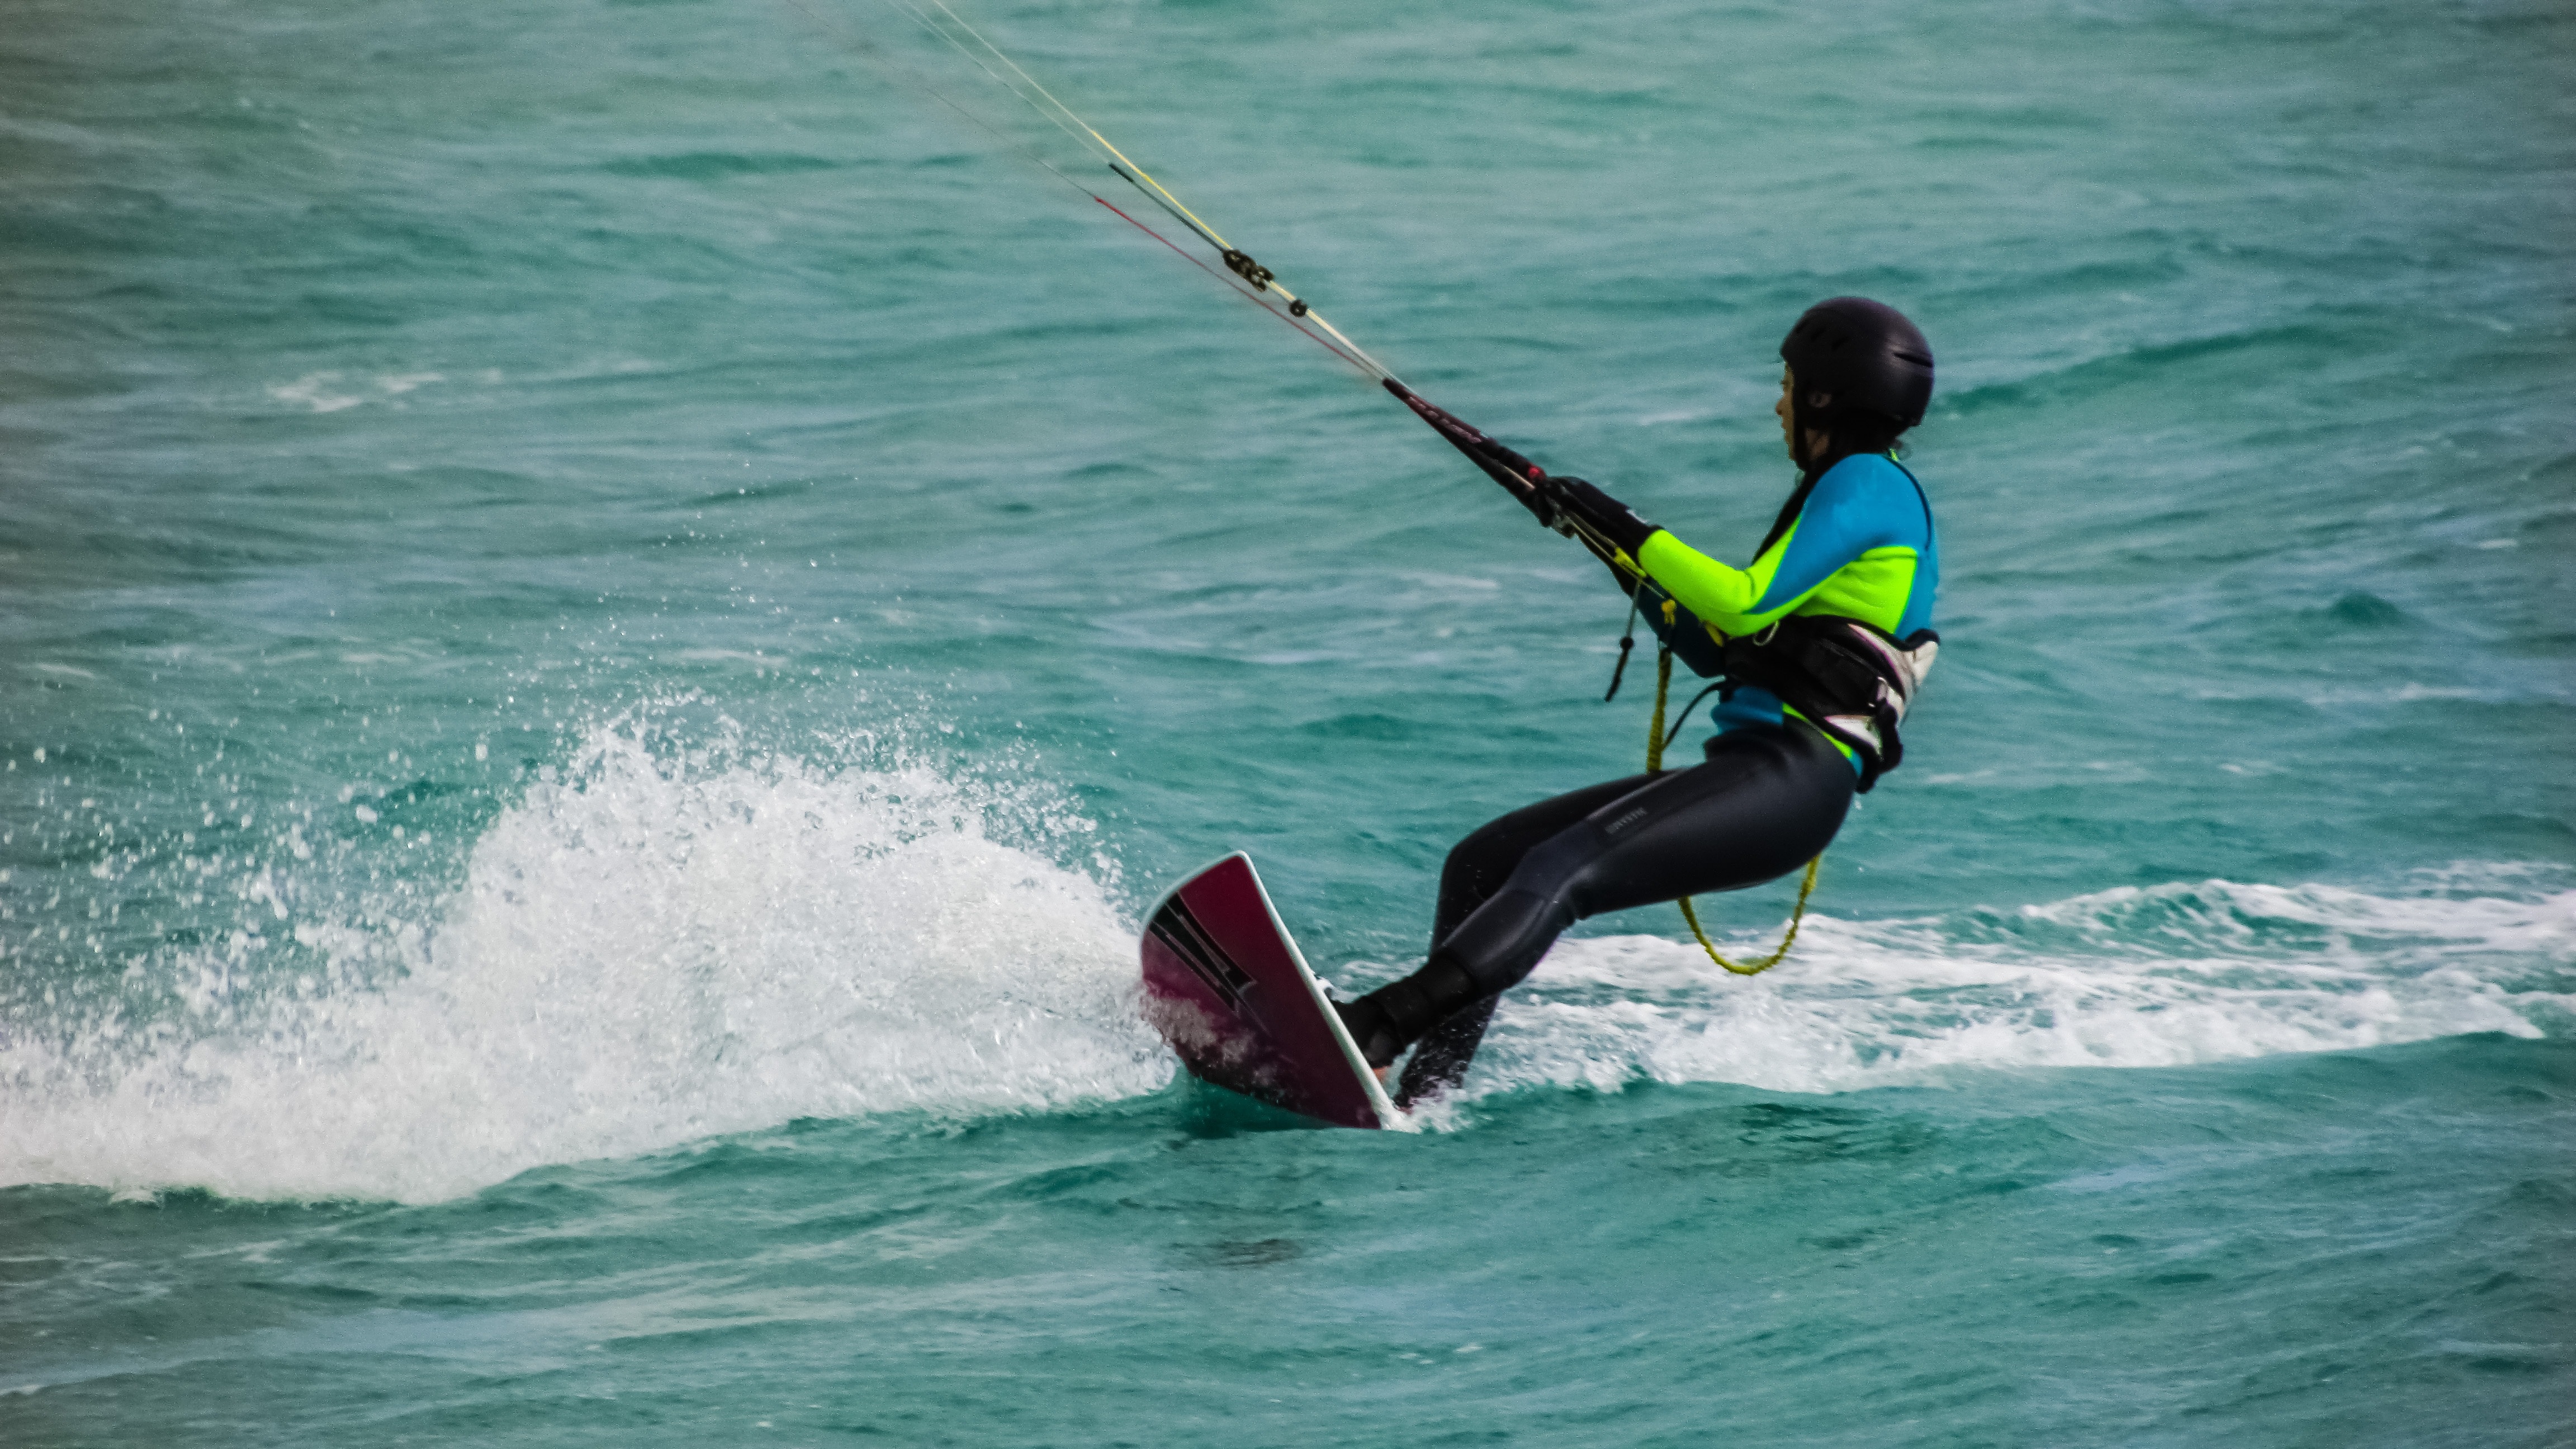 Kite Surfing, Sport, Surfing, Sea, one person, water